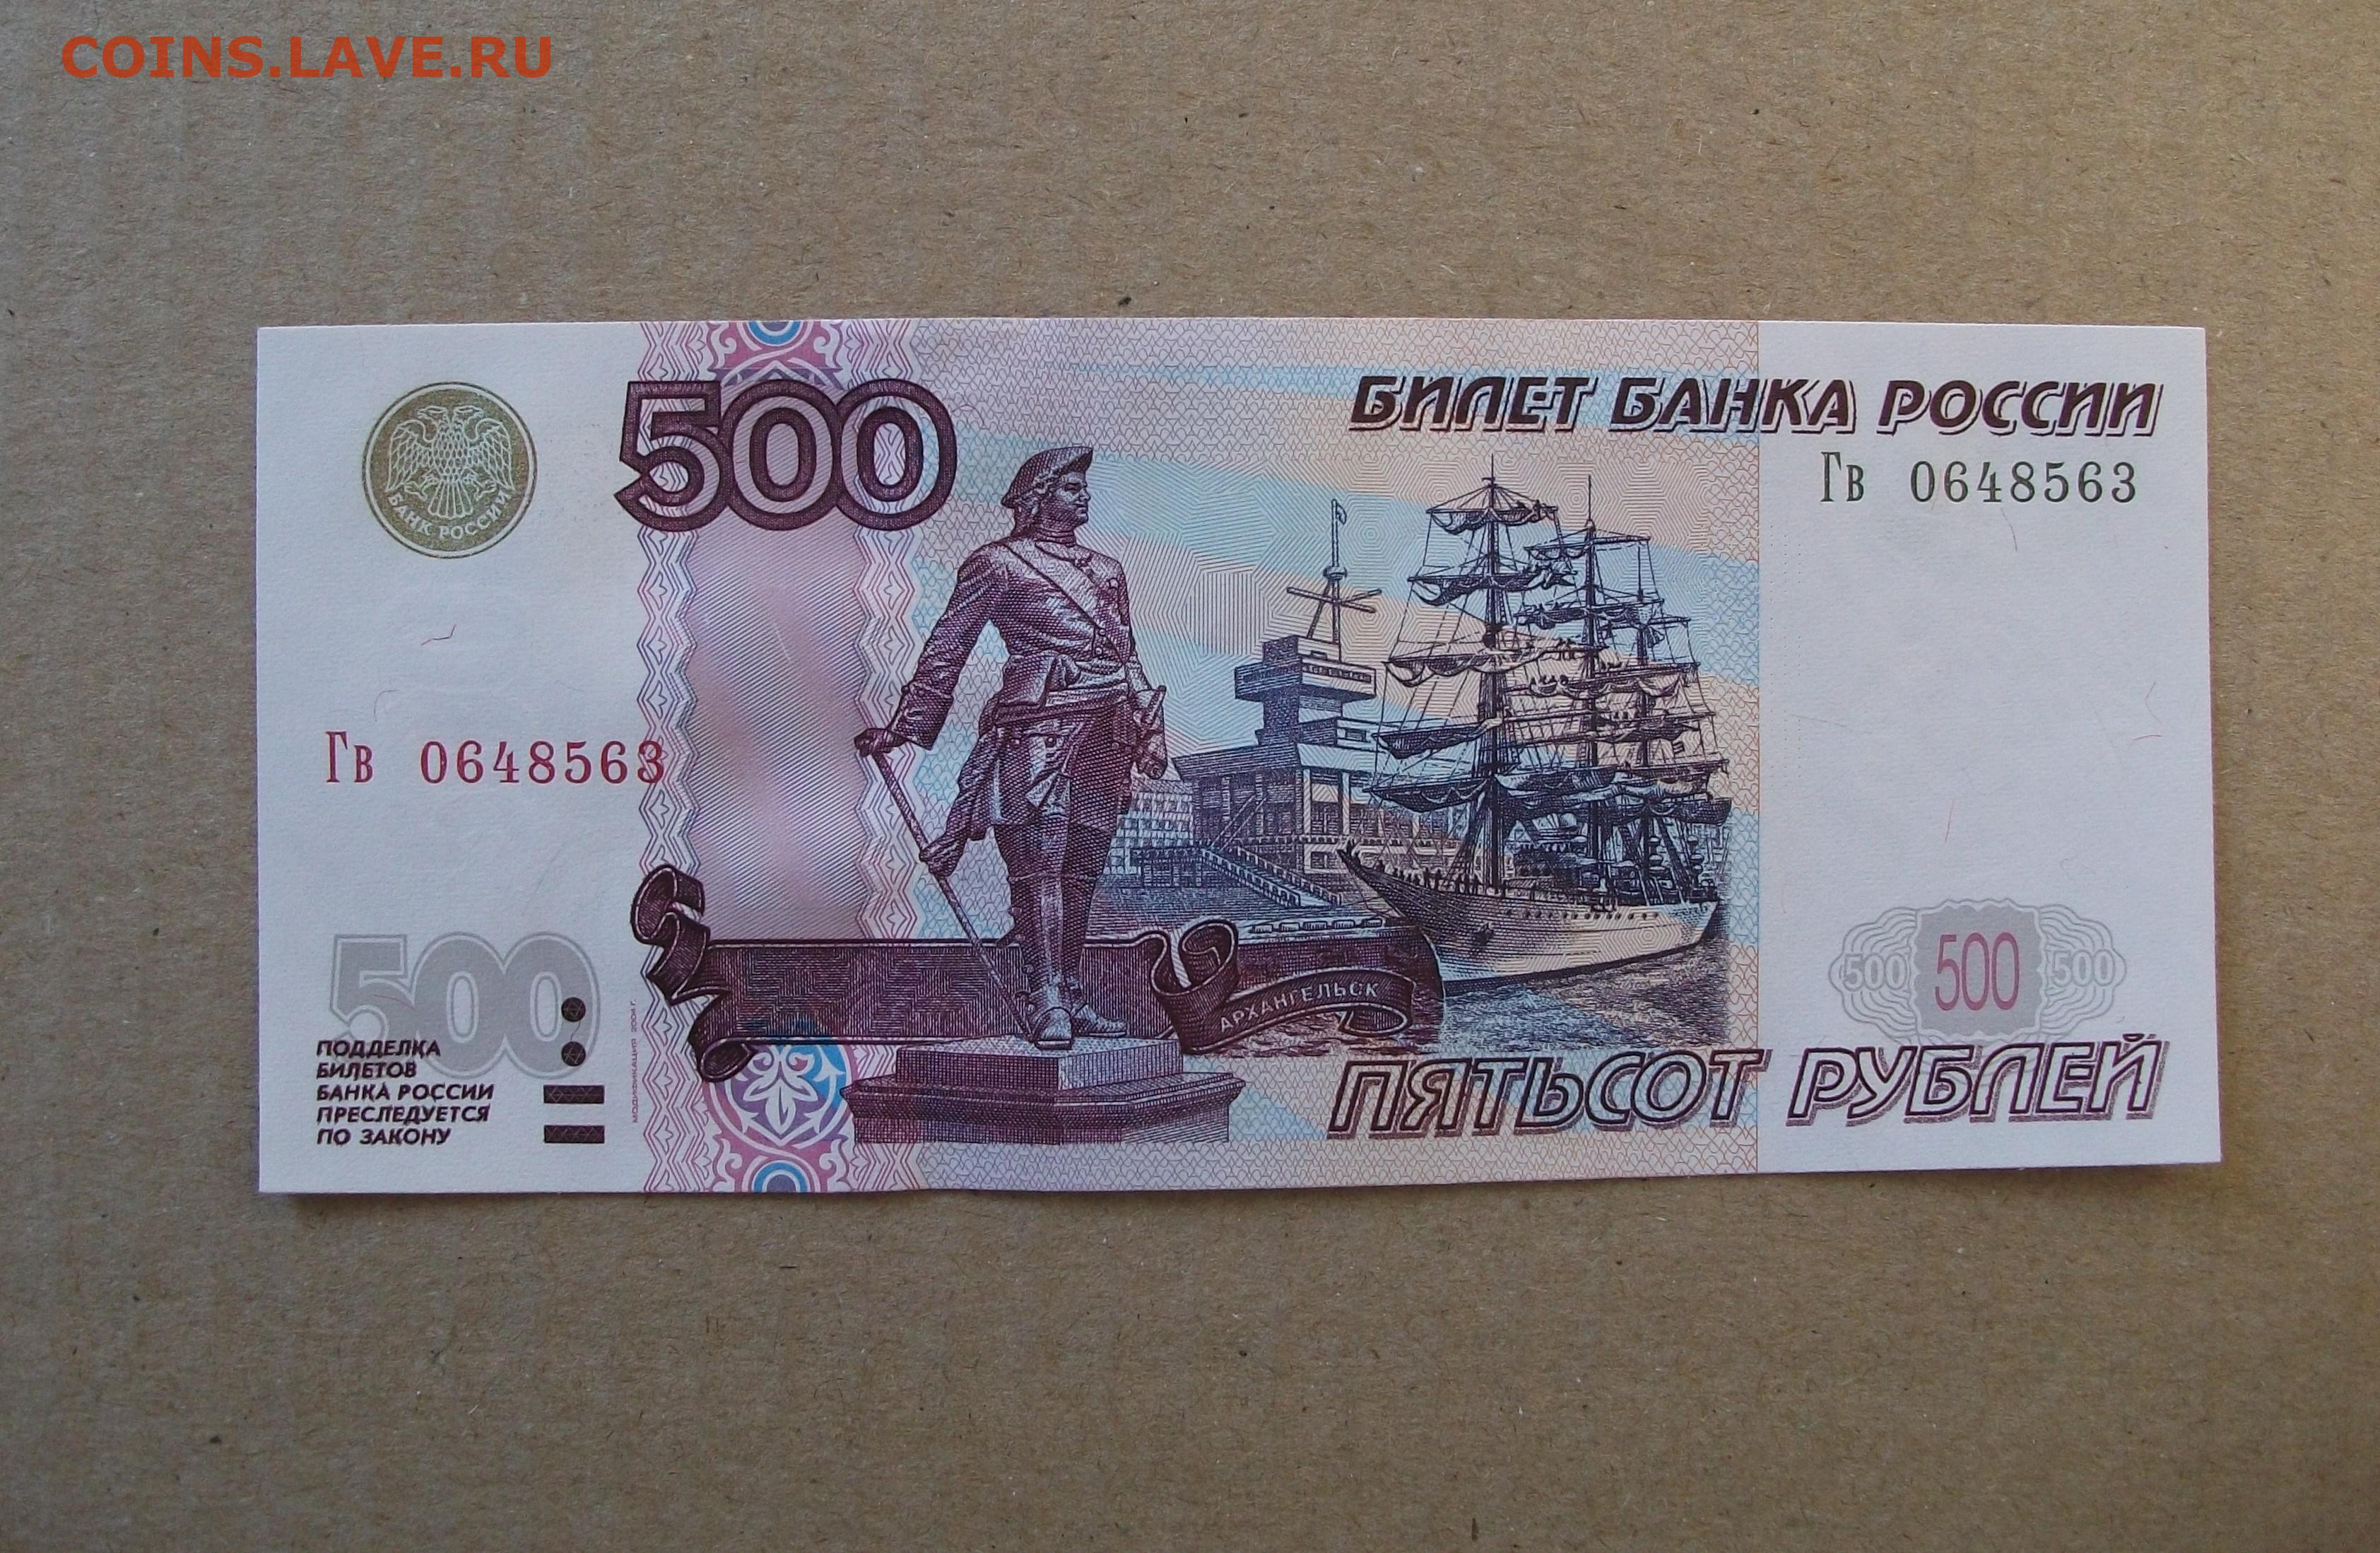 500 рублей на steam фото 102